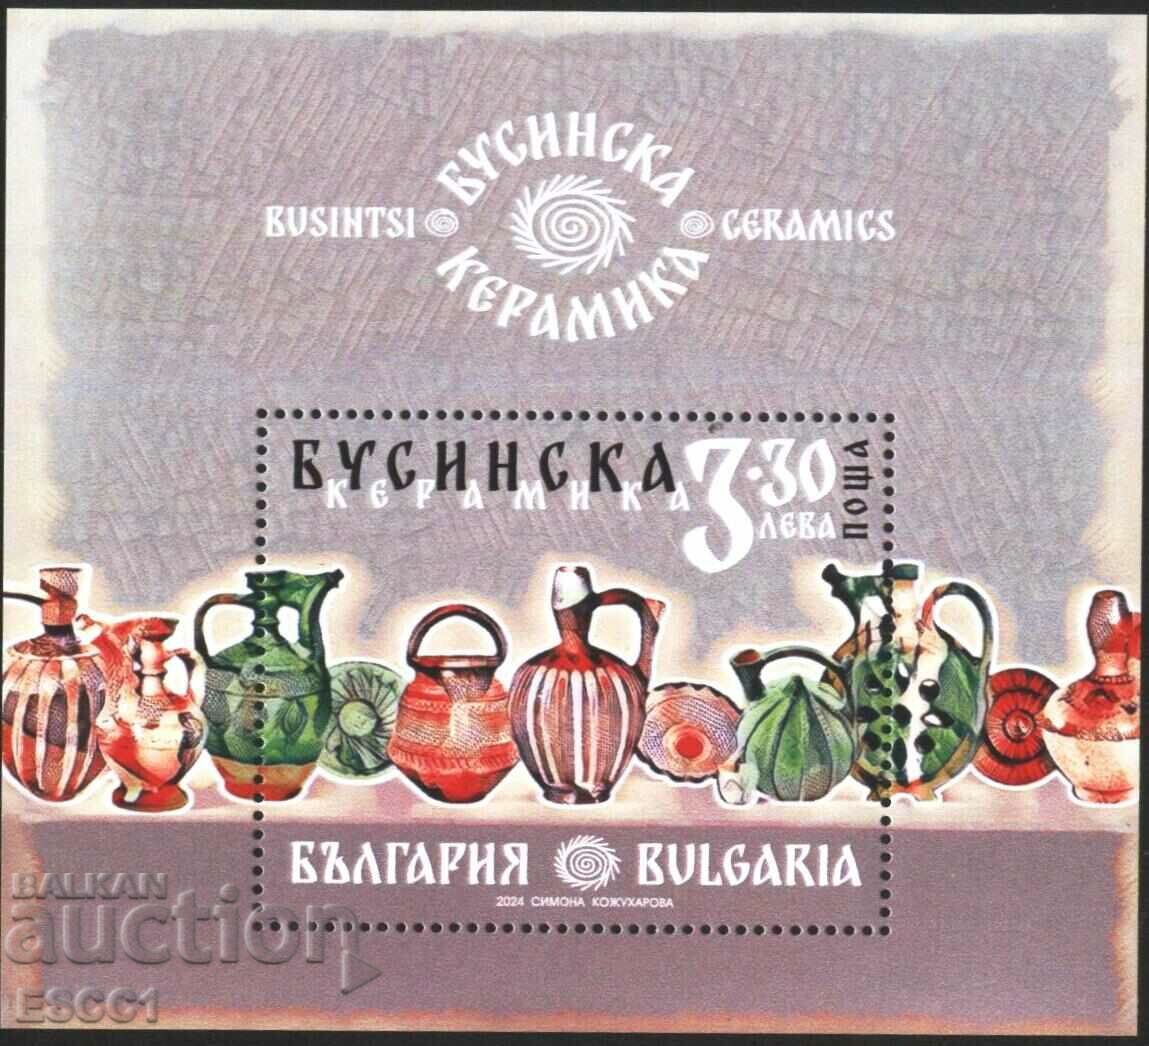 Pure Businska Ceramica 2024 from Bulgaria